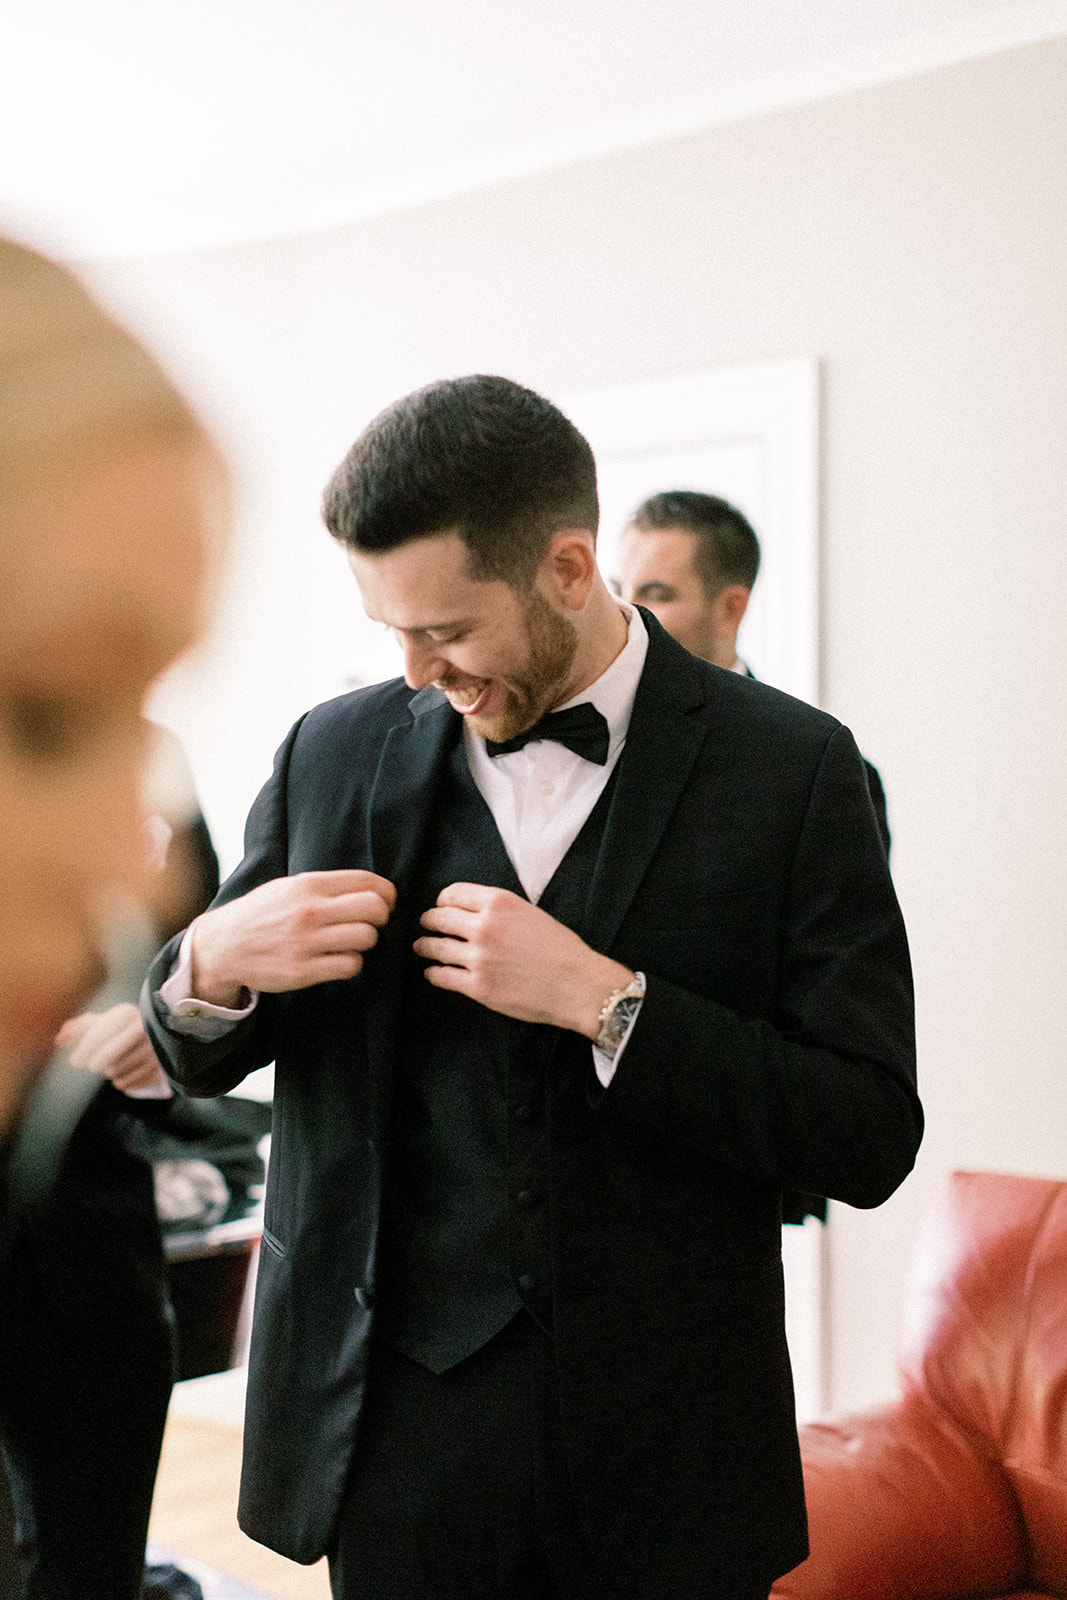 Pennsylvania wedding photographer captures groom getting ready for wedding day